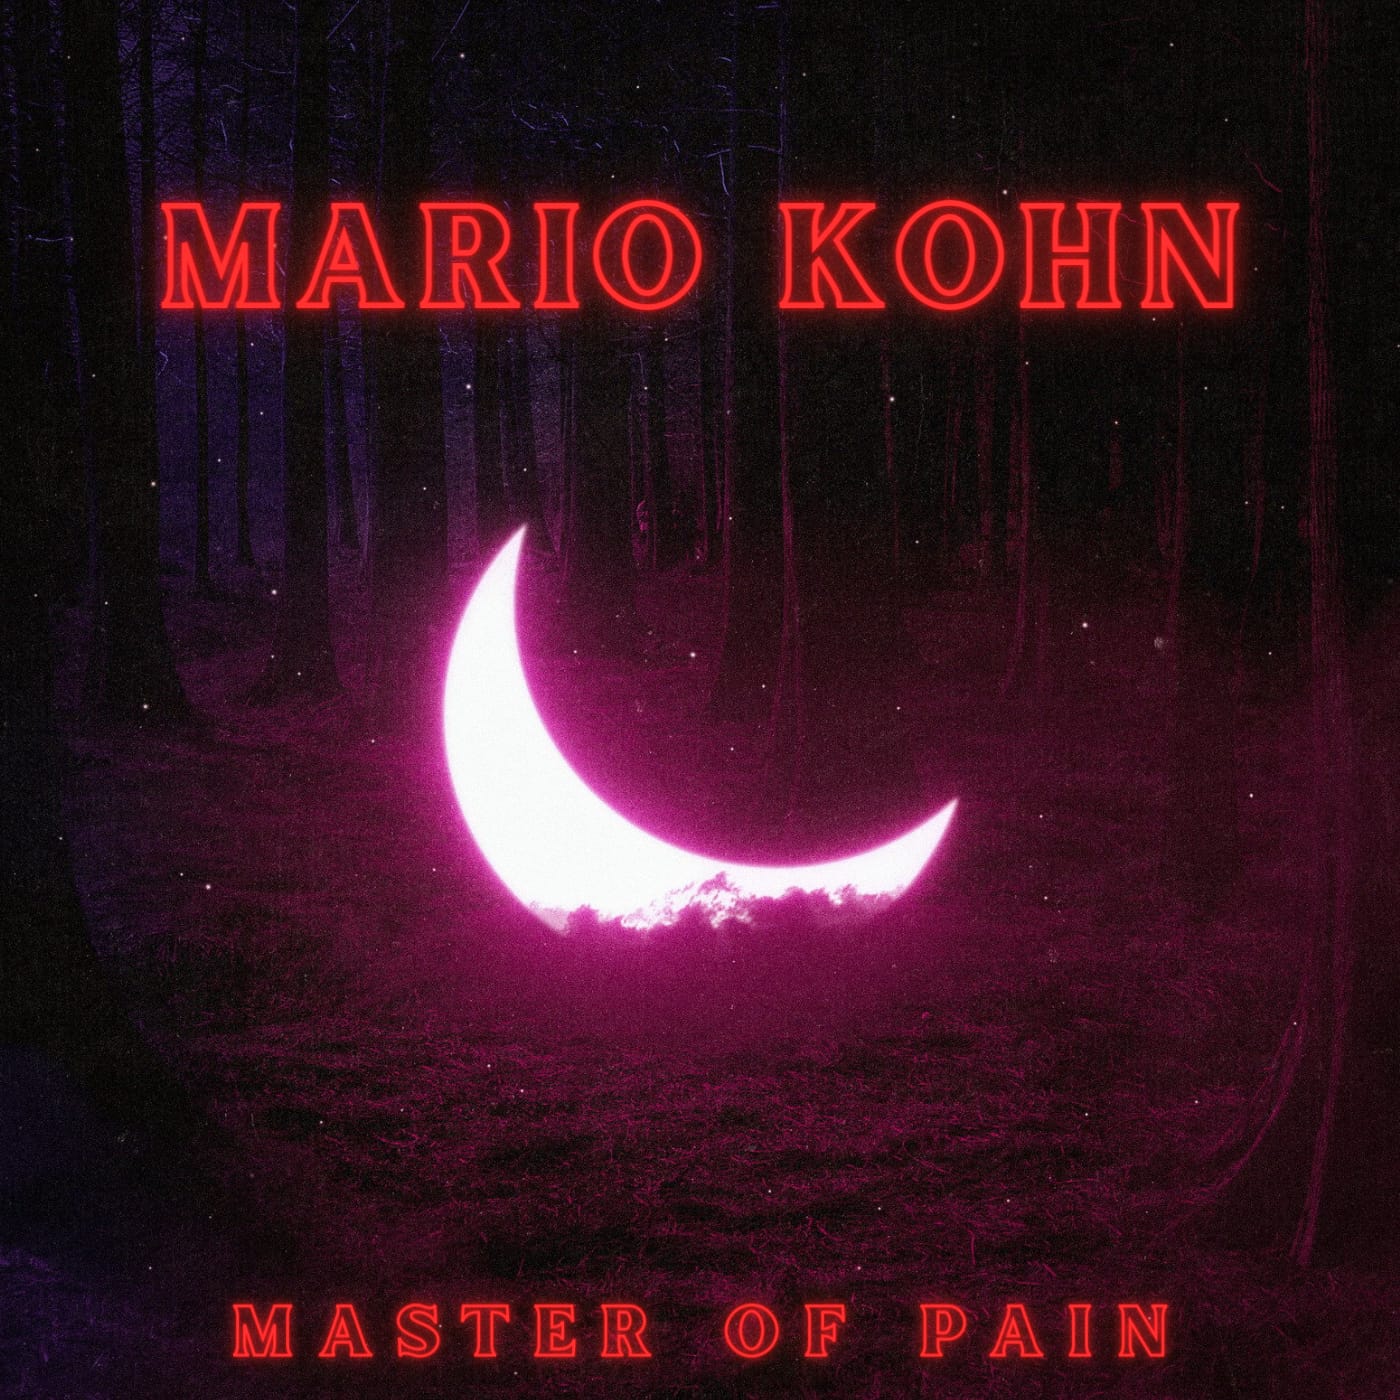 Mario Kohn lança “Master of Pain” do Eyes of Gaia e inicia sua trajetória solo